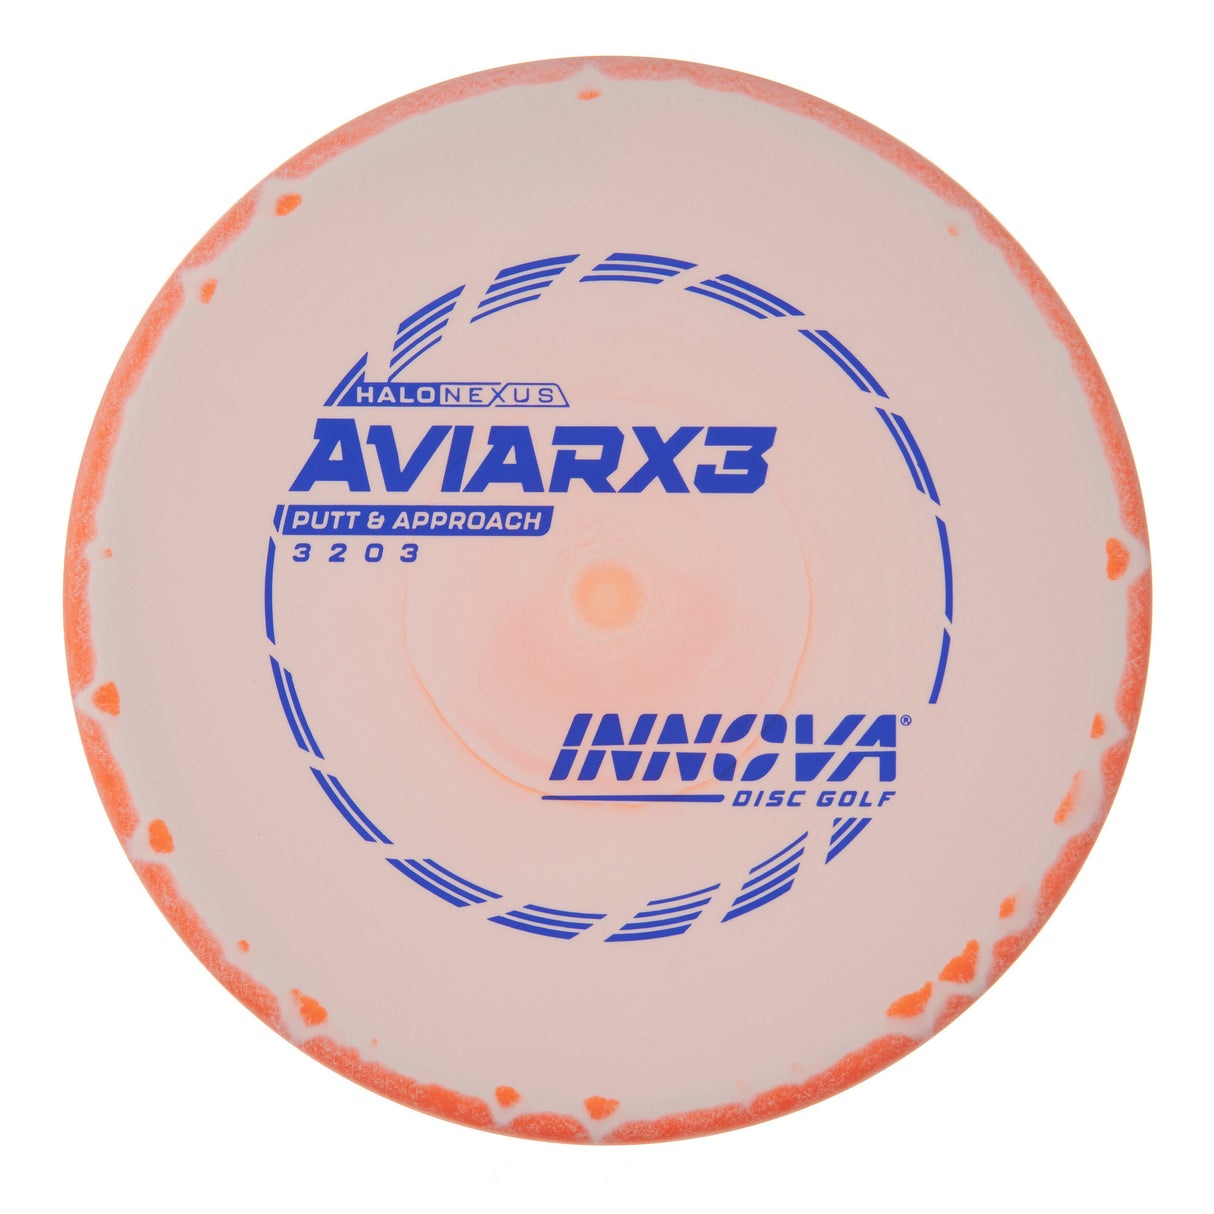 Innova AviarX3 - Halo Nexus 171g | Style 0004